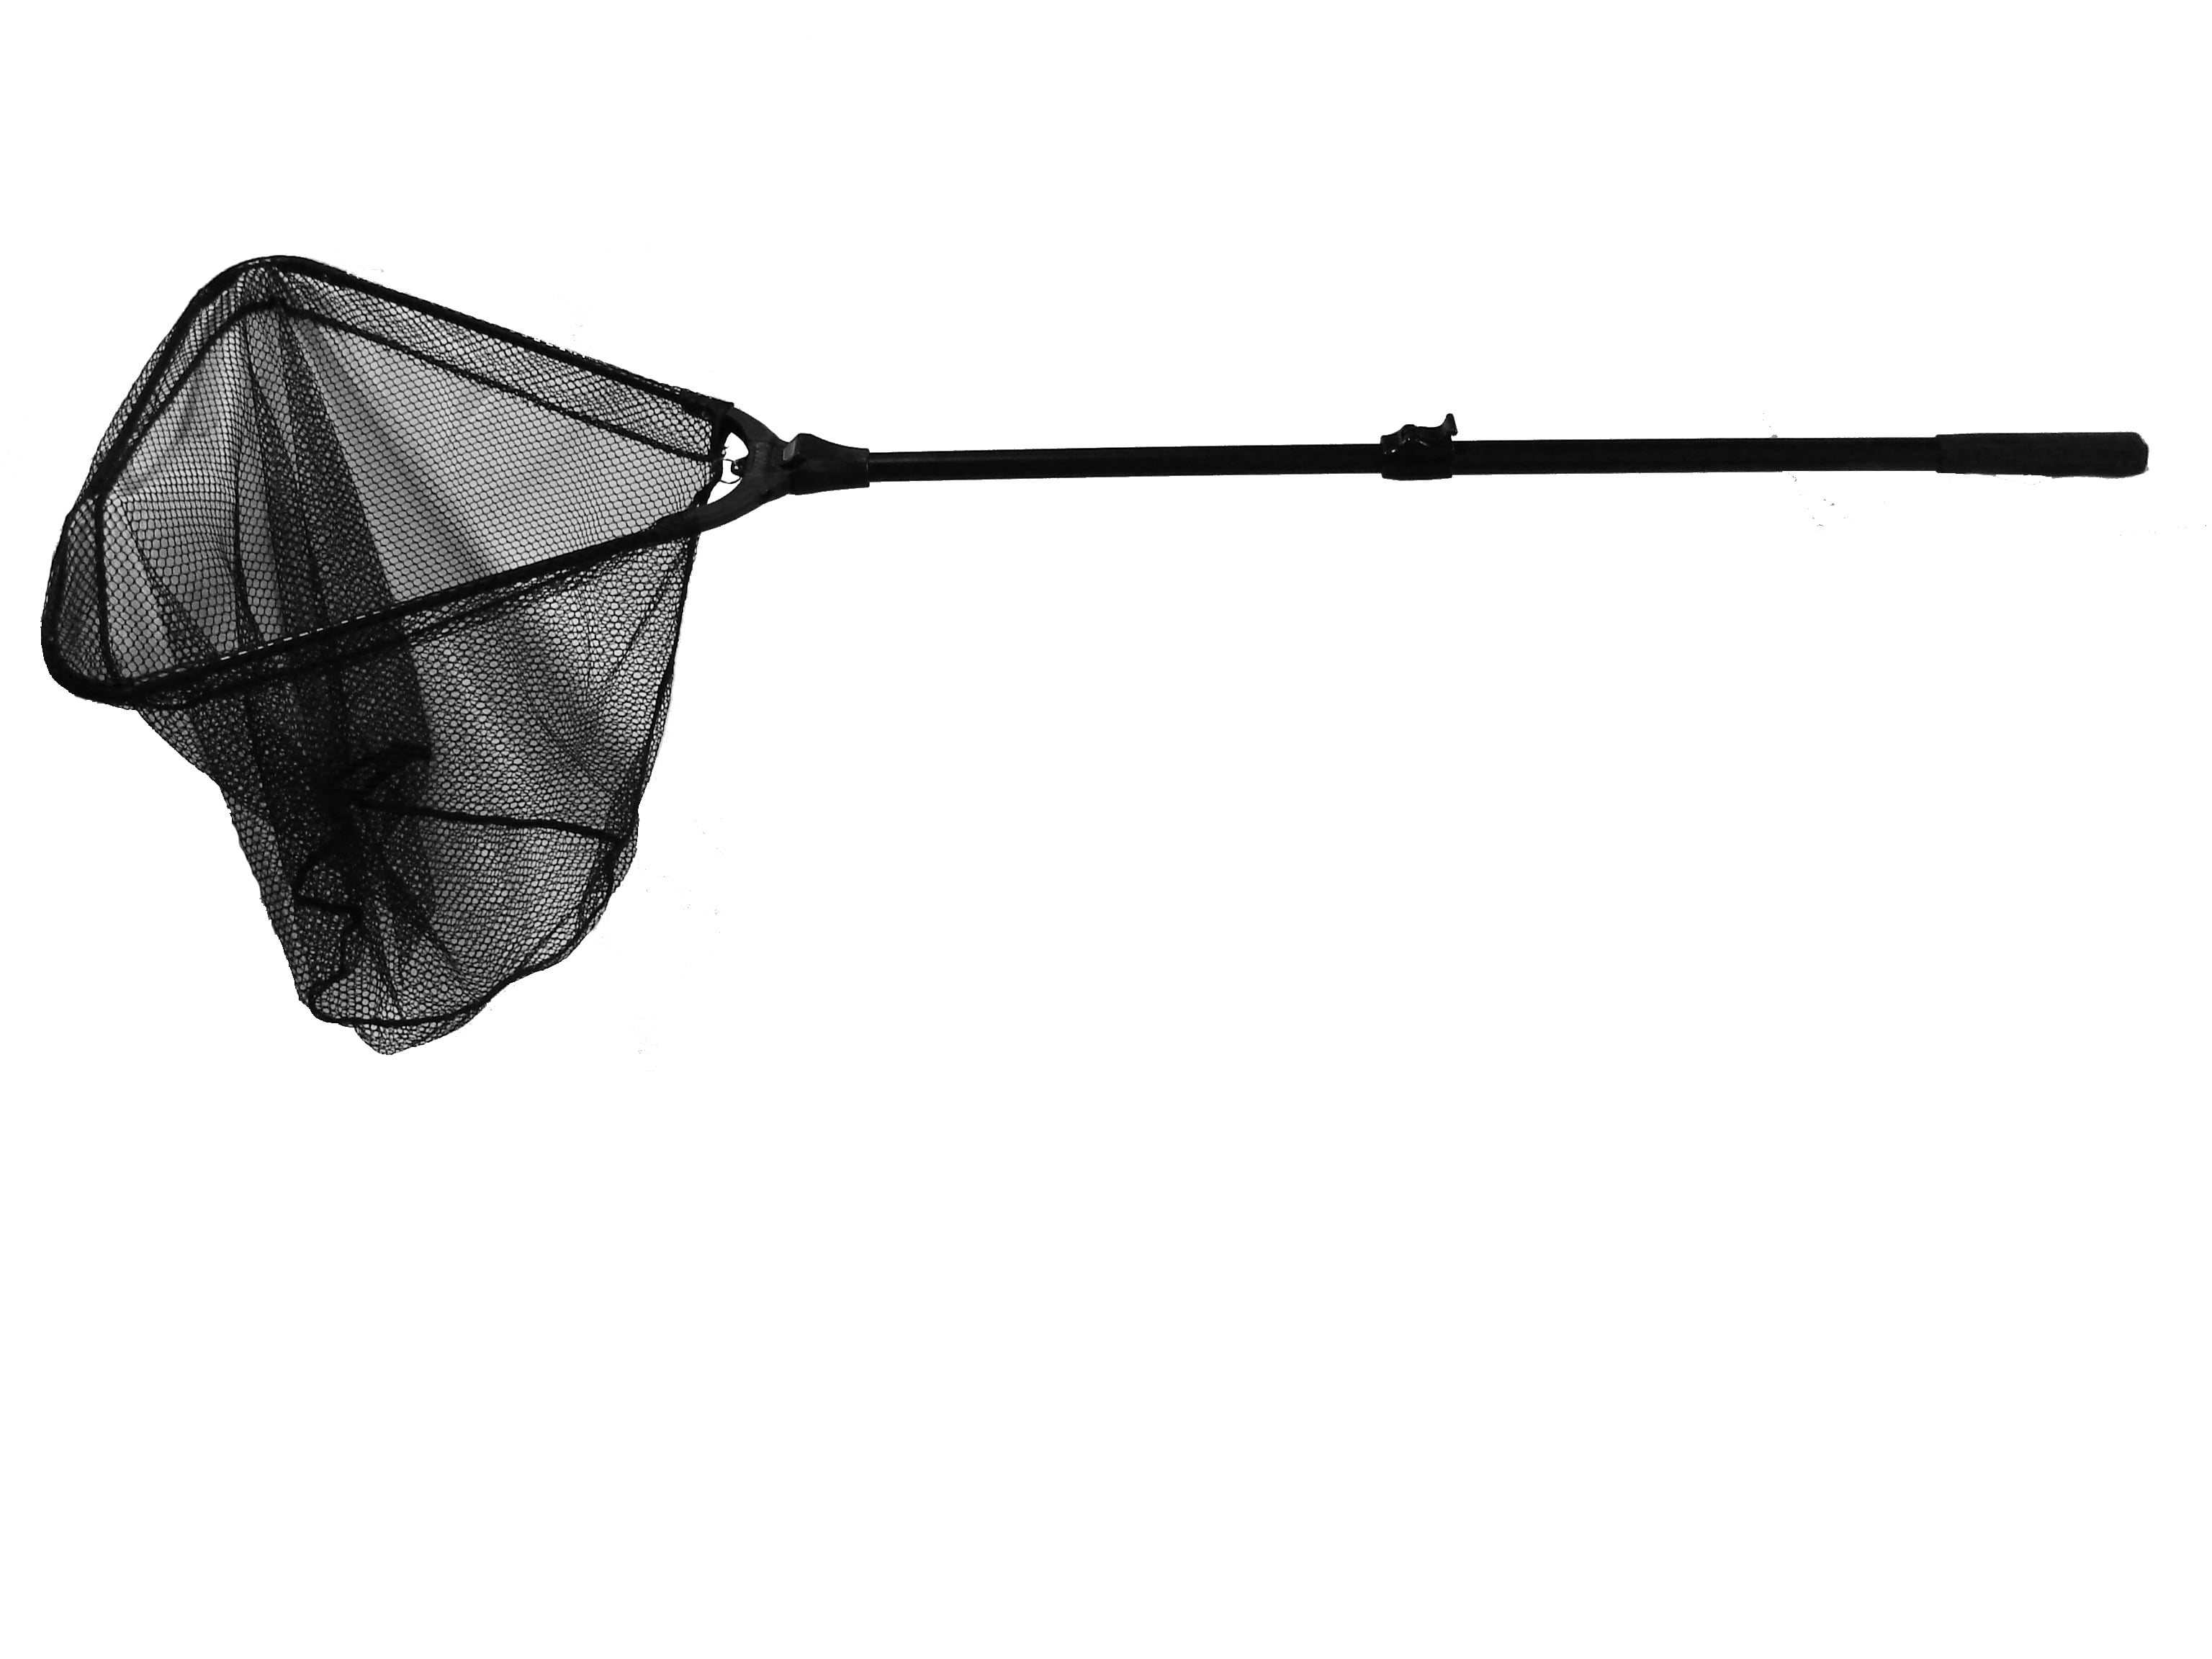 Frabill Kwik-Stow Folding Fishing Net, Black Transparent Mesh